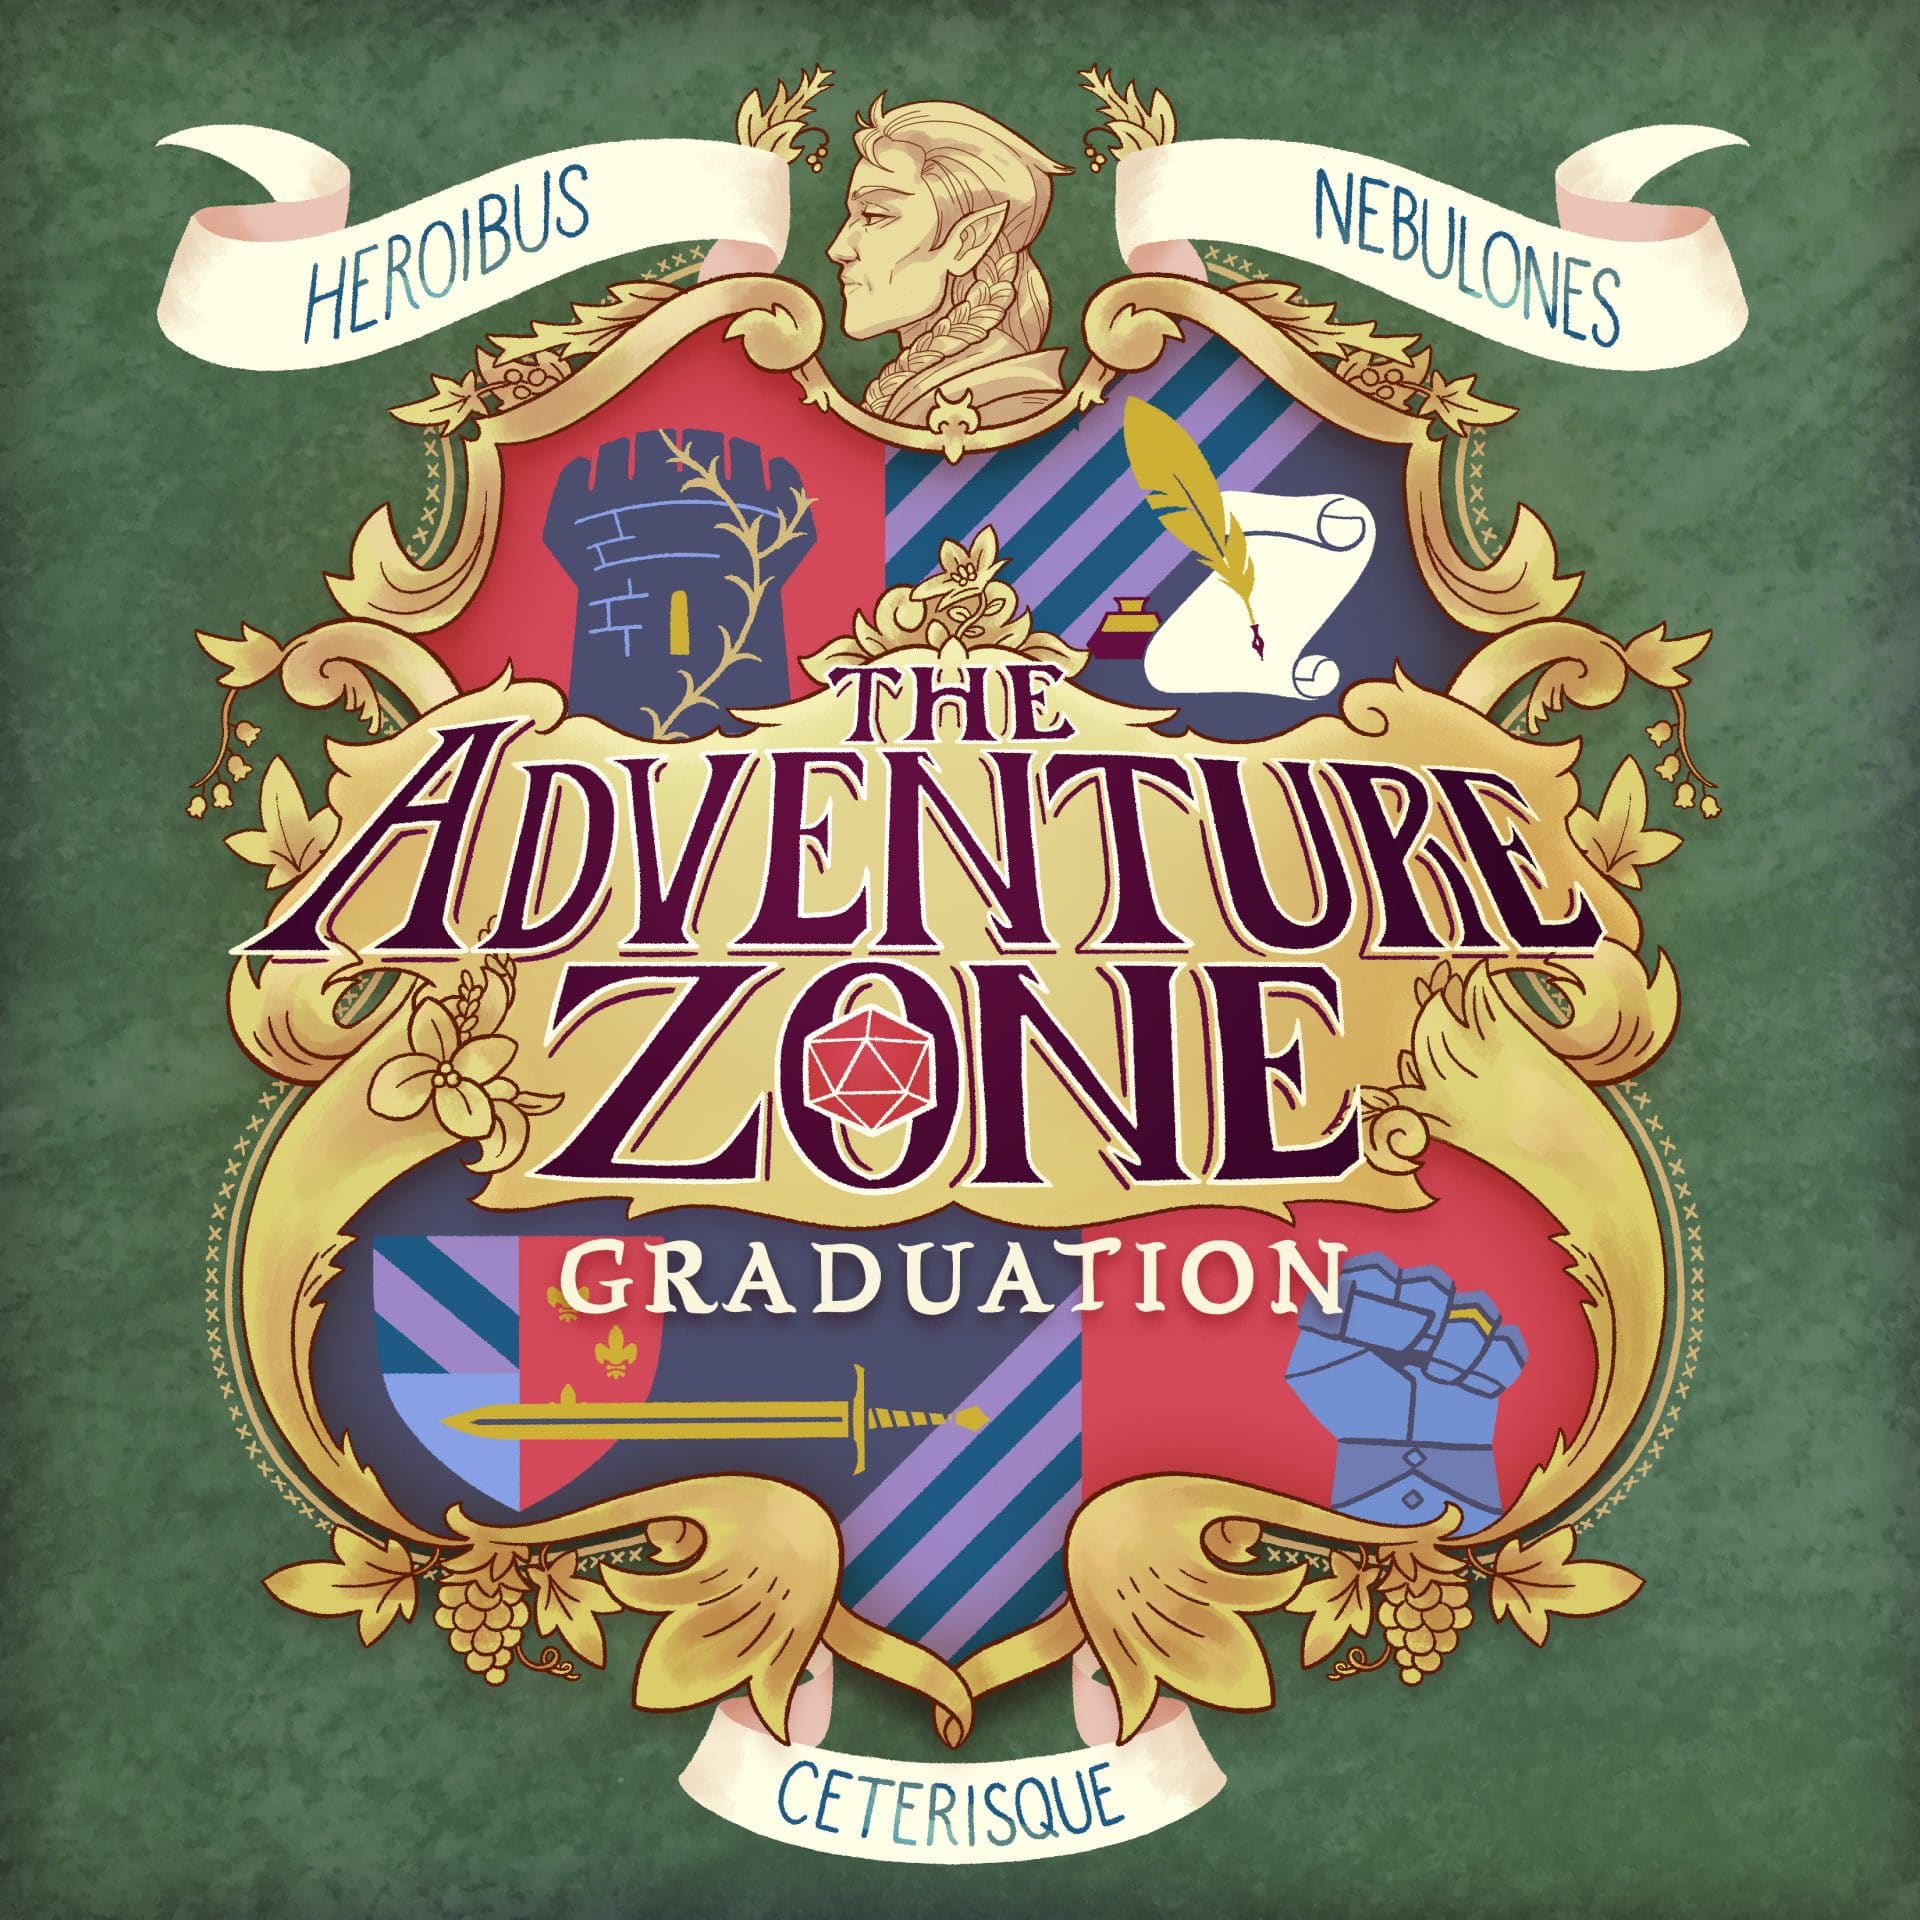 The Adventure Zone Graduation logo